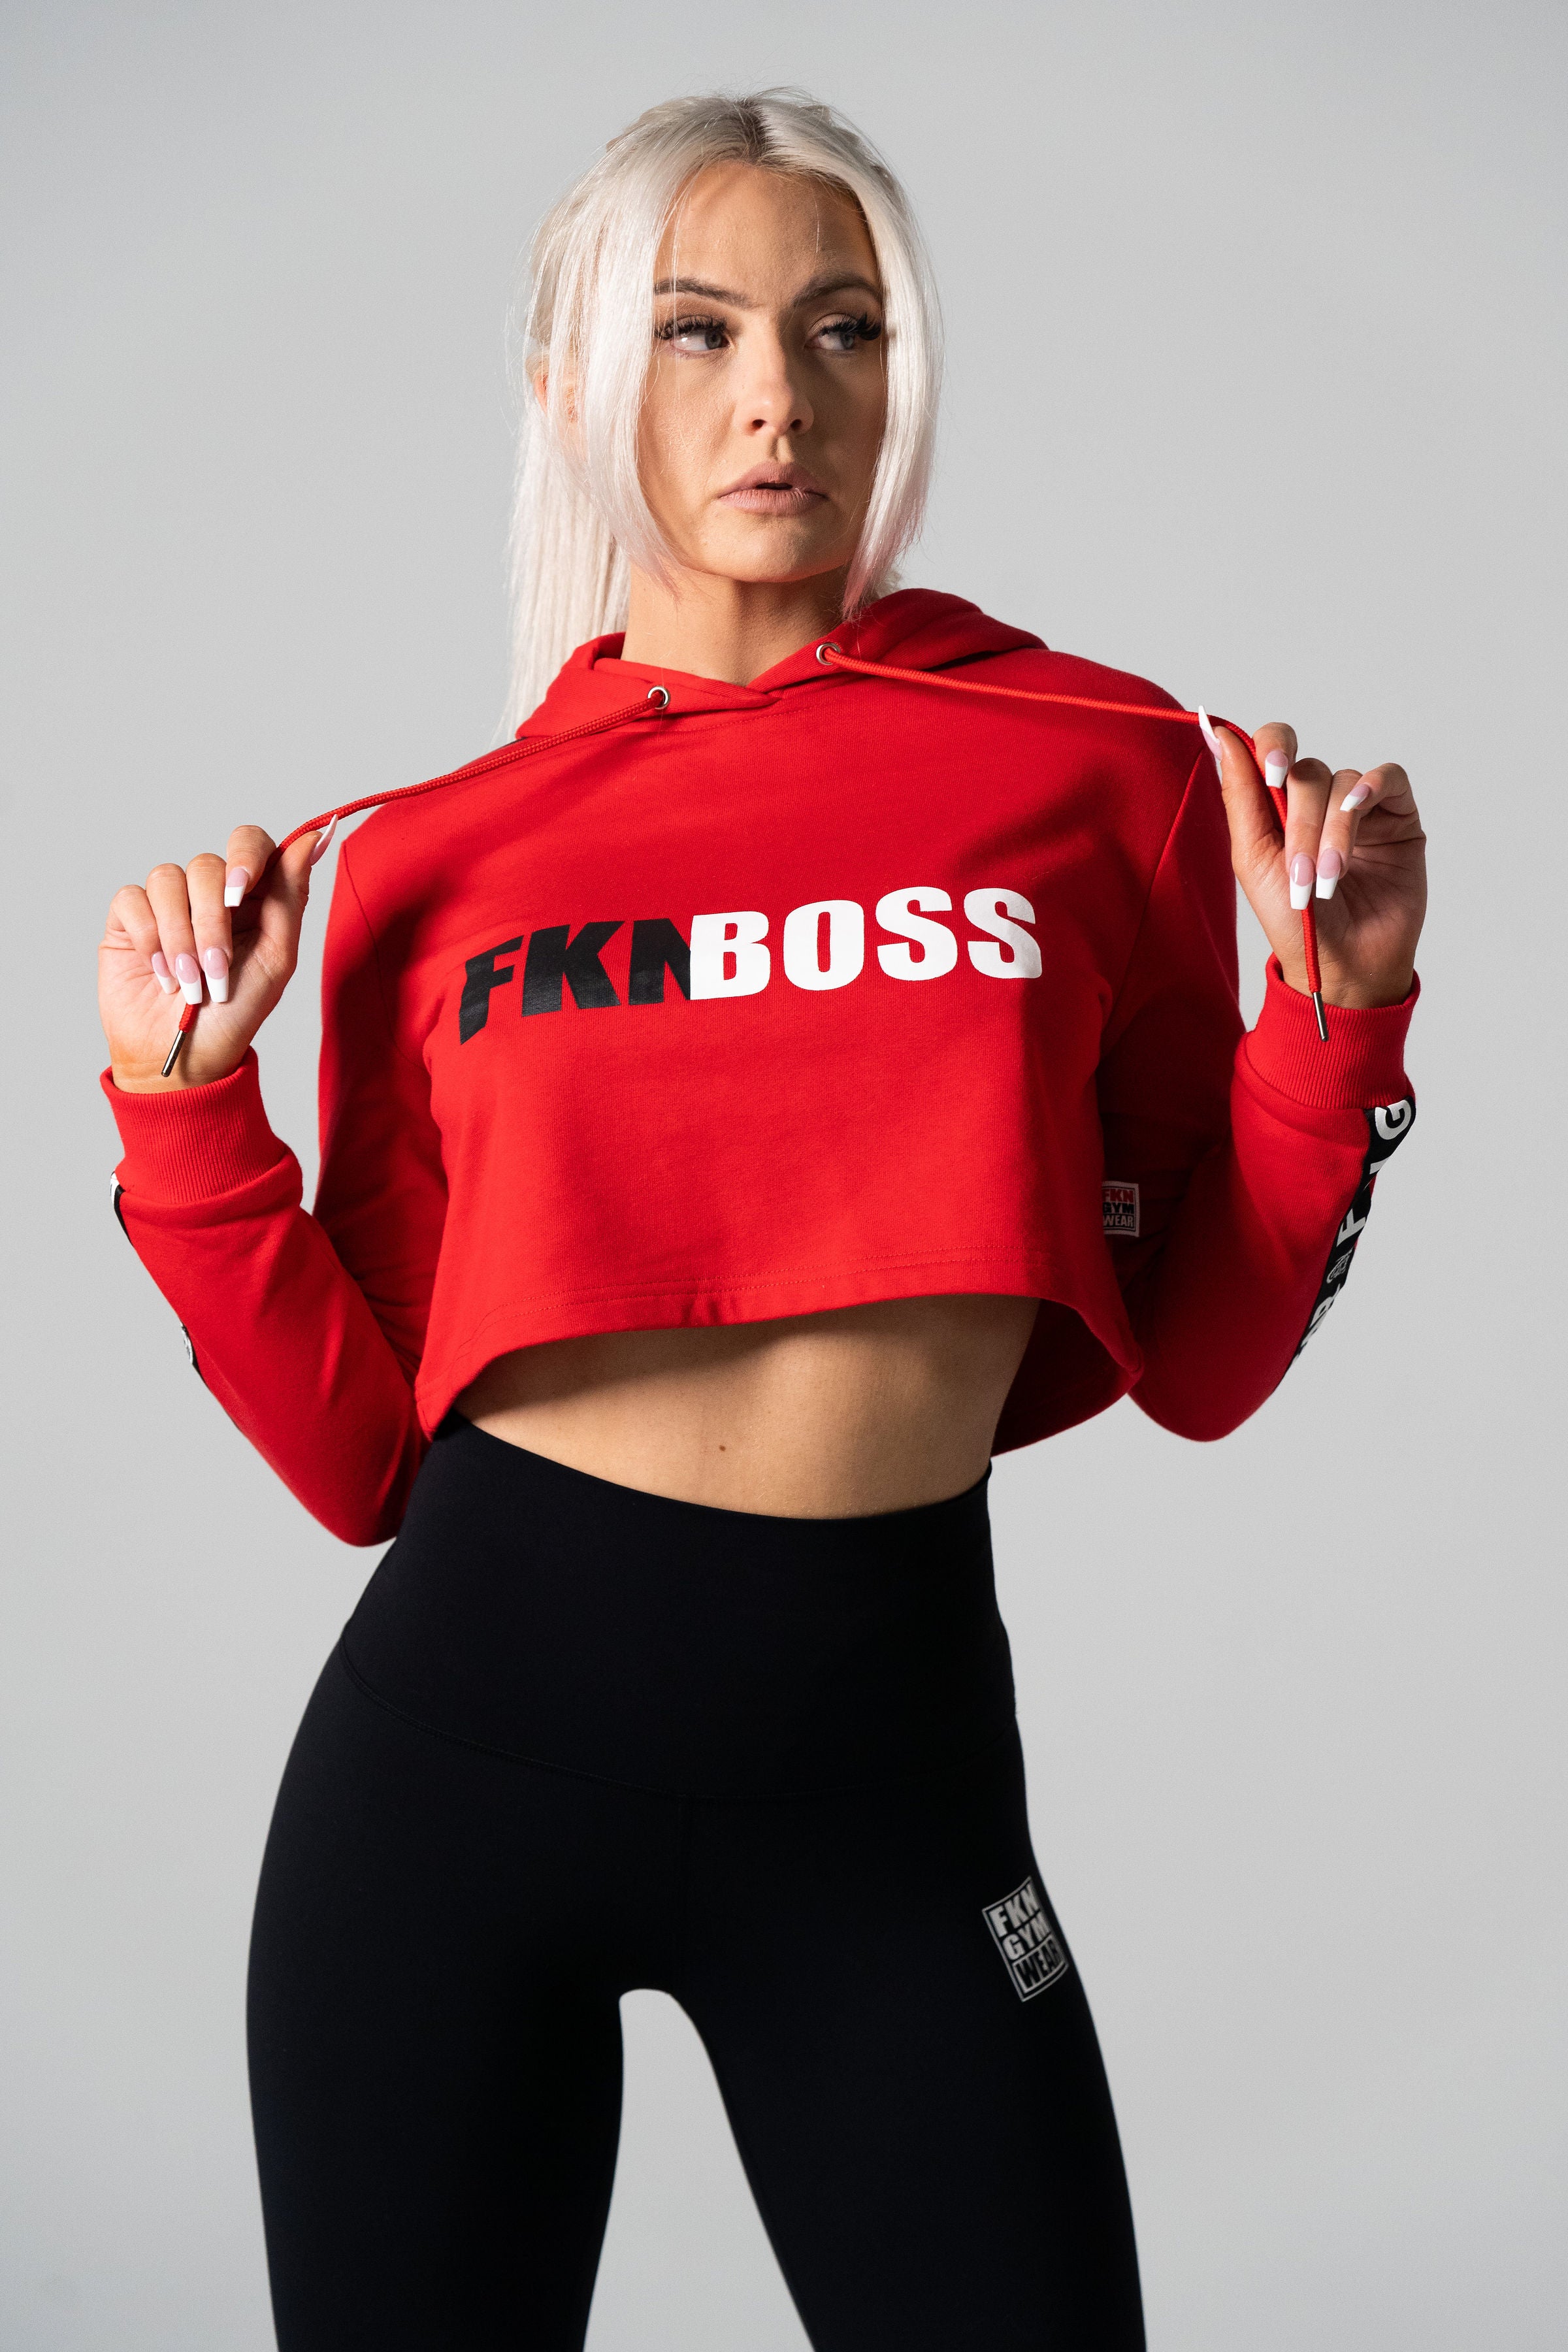 FKNBOSS Women's Cropped Gym Hoodie, Red